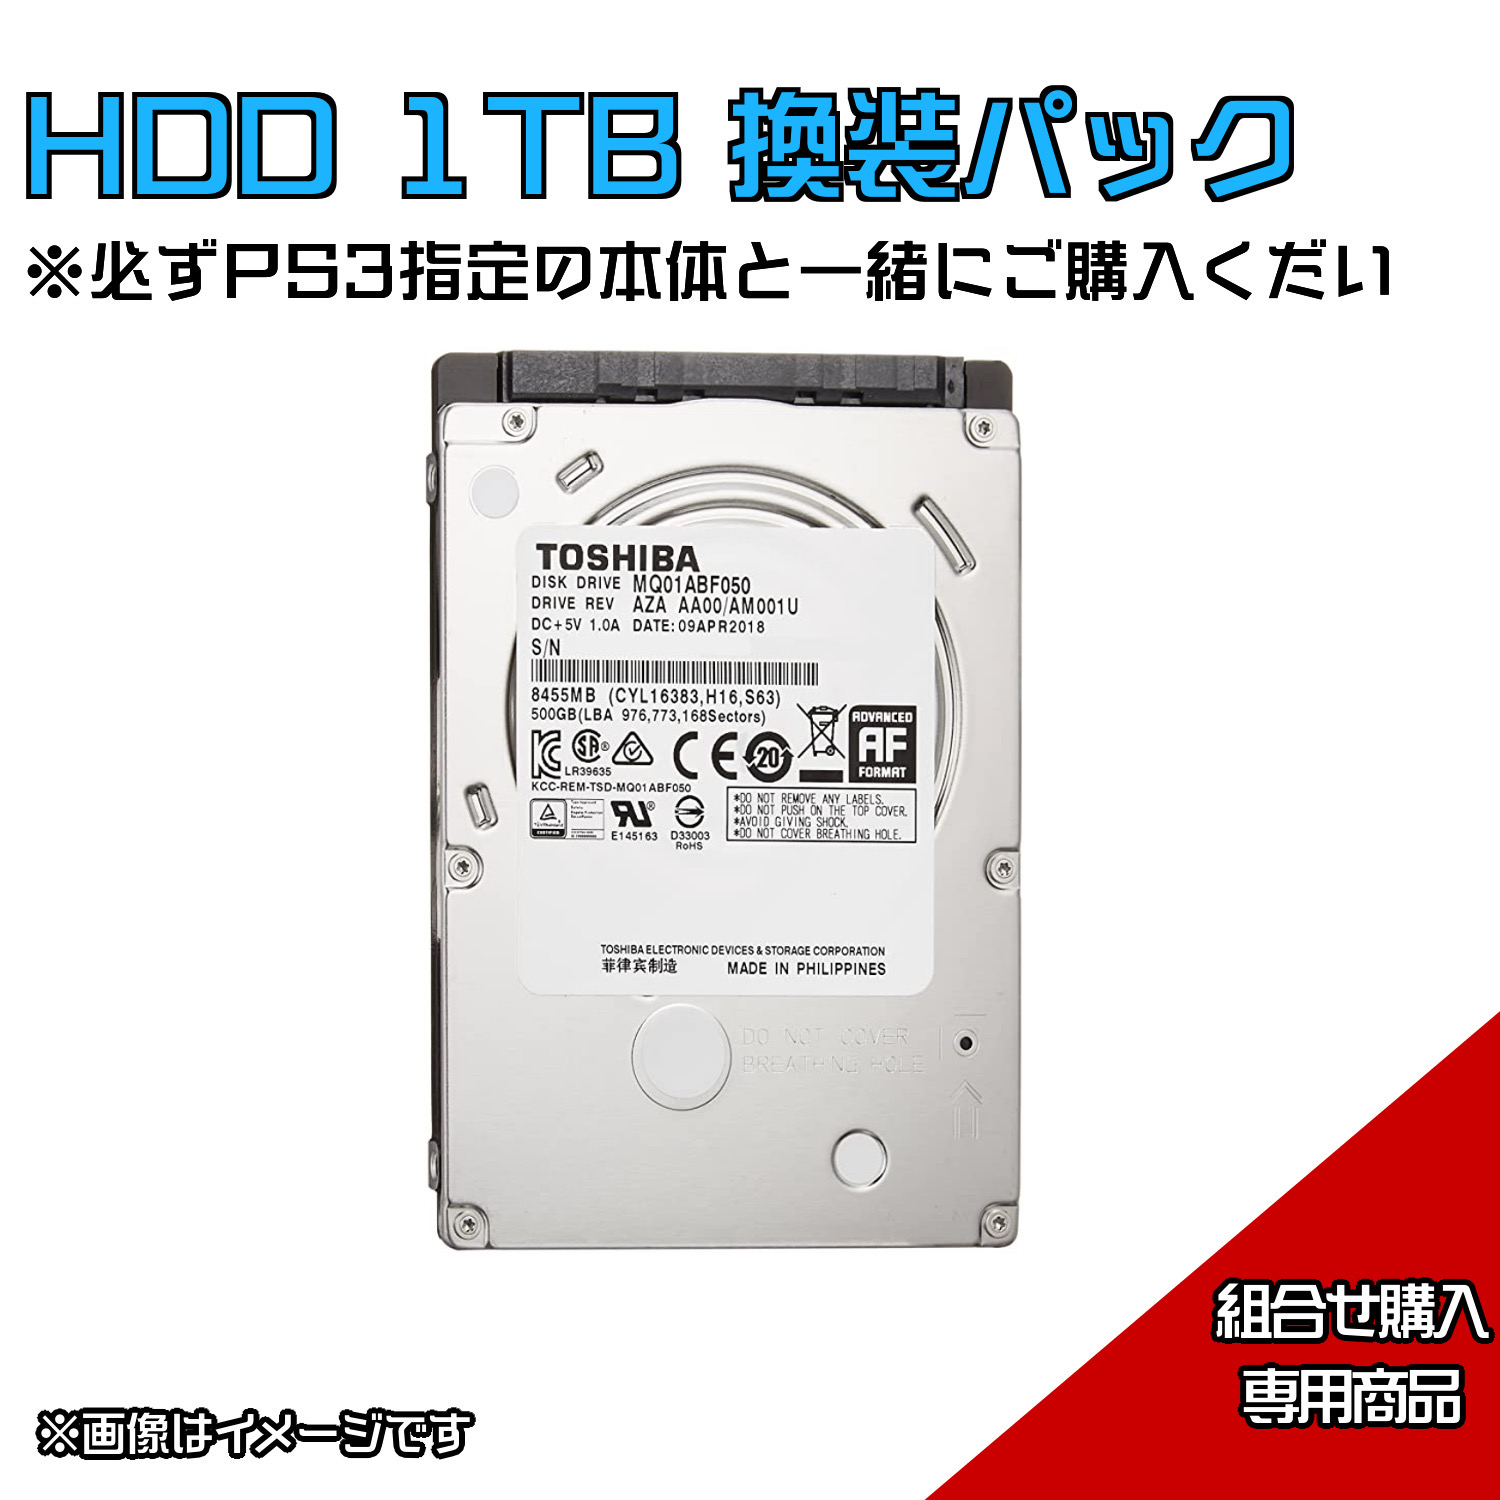 ☆HDDアップグレード1TB 換装パック☆PS3 PlayStation 3 プレステ 